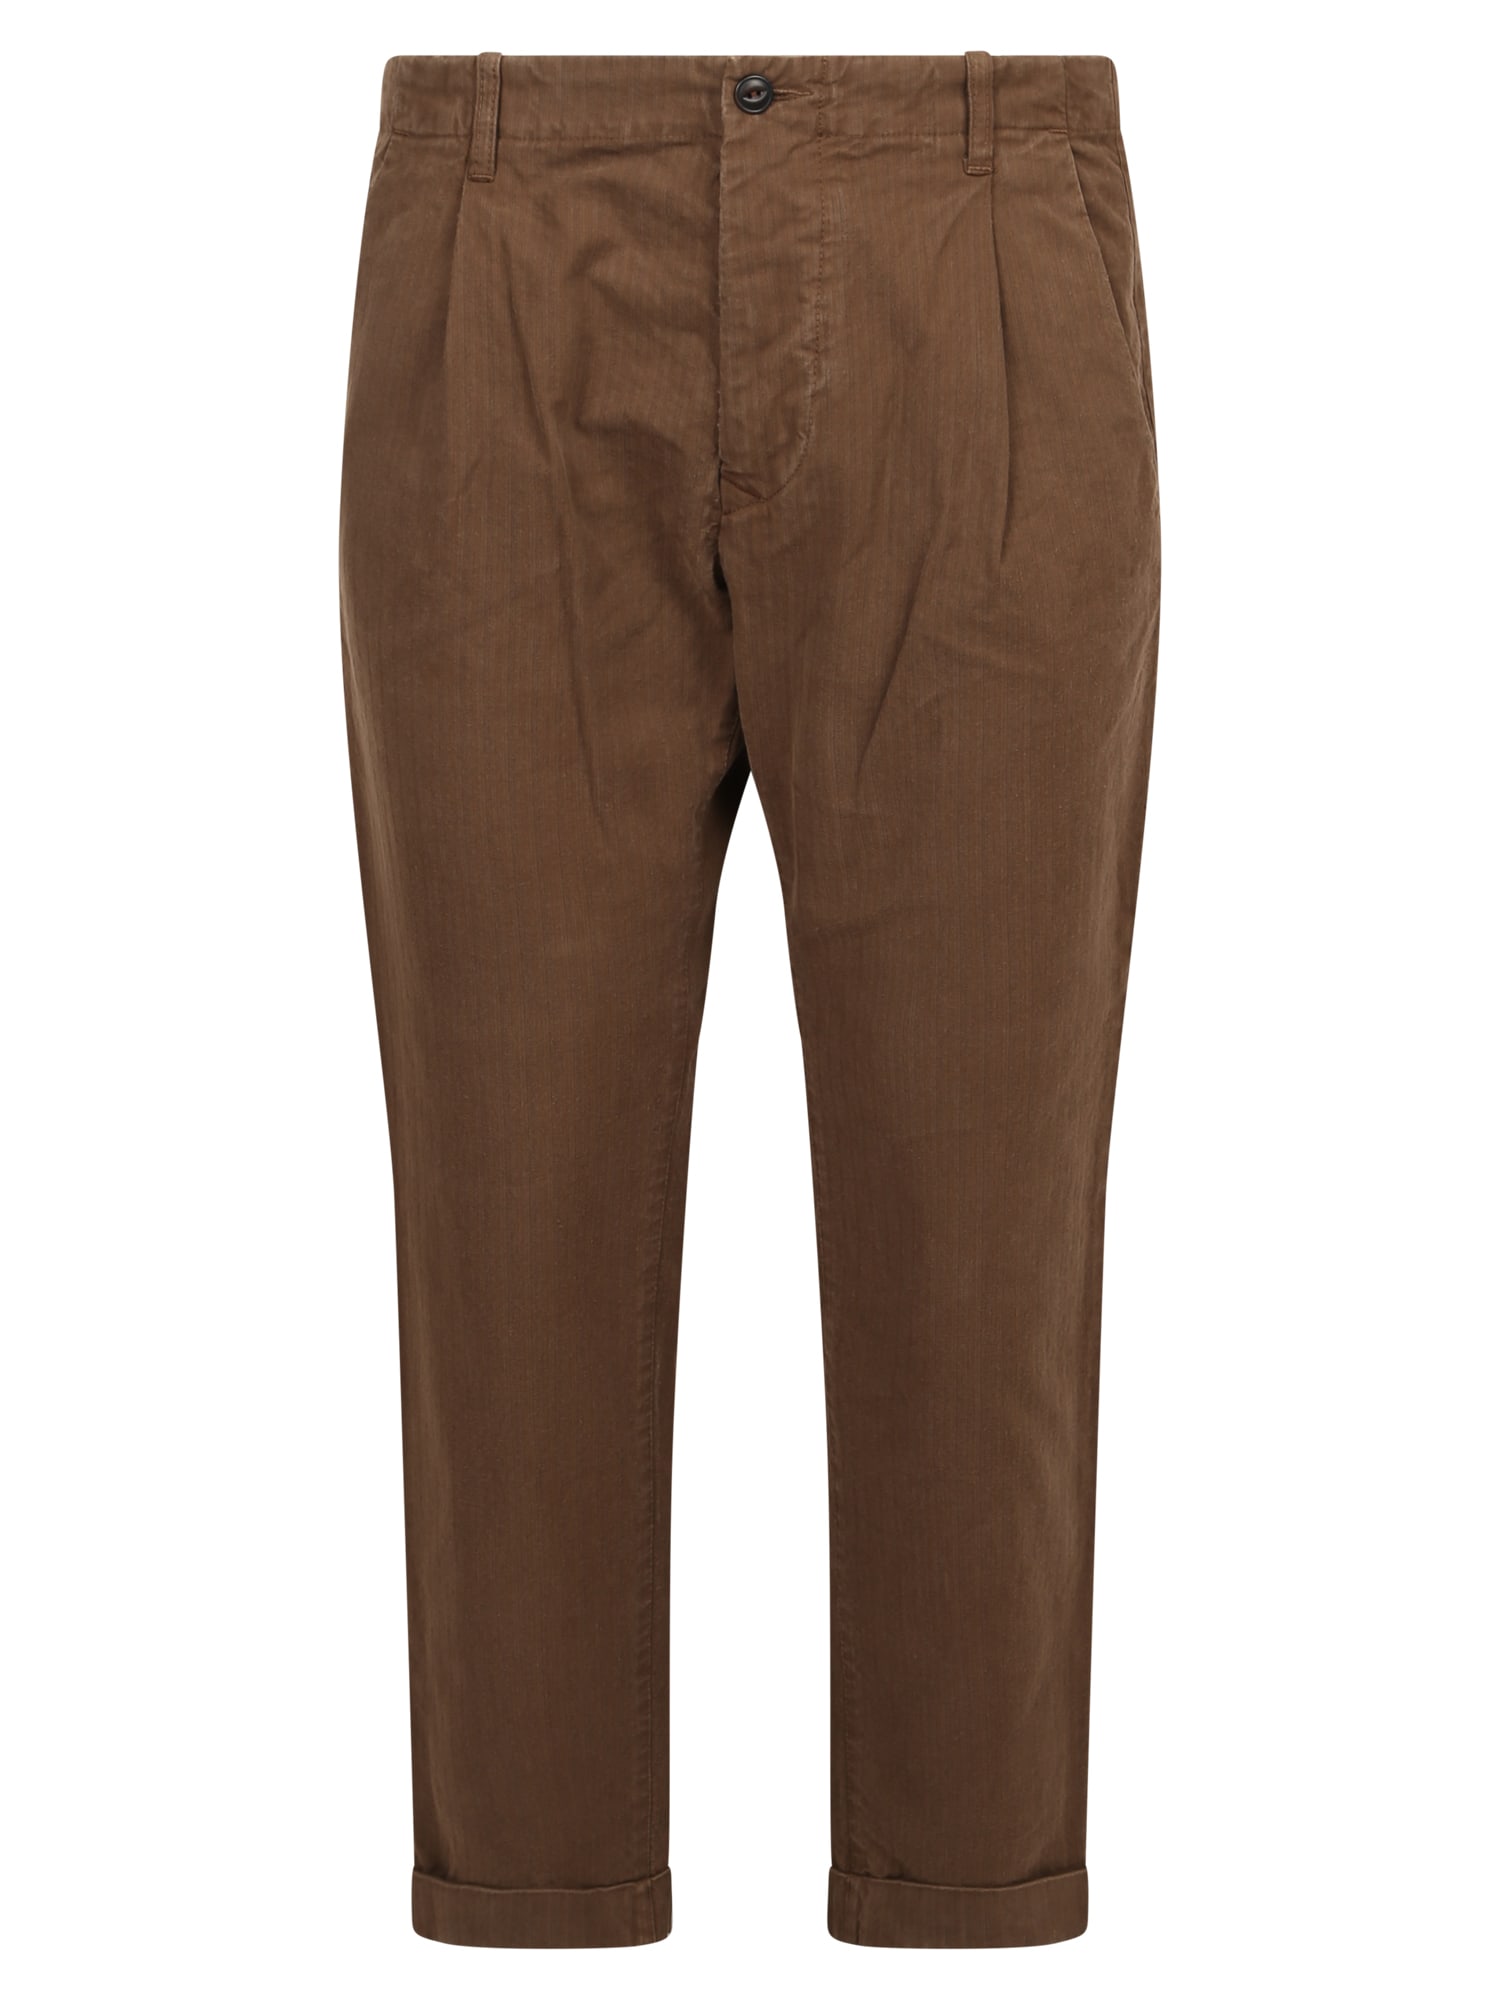 Shop Original Vintage Style Brown Trousers